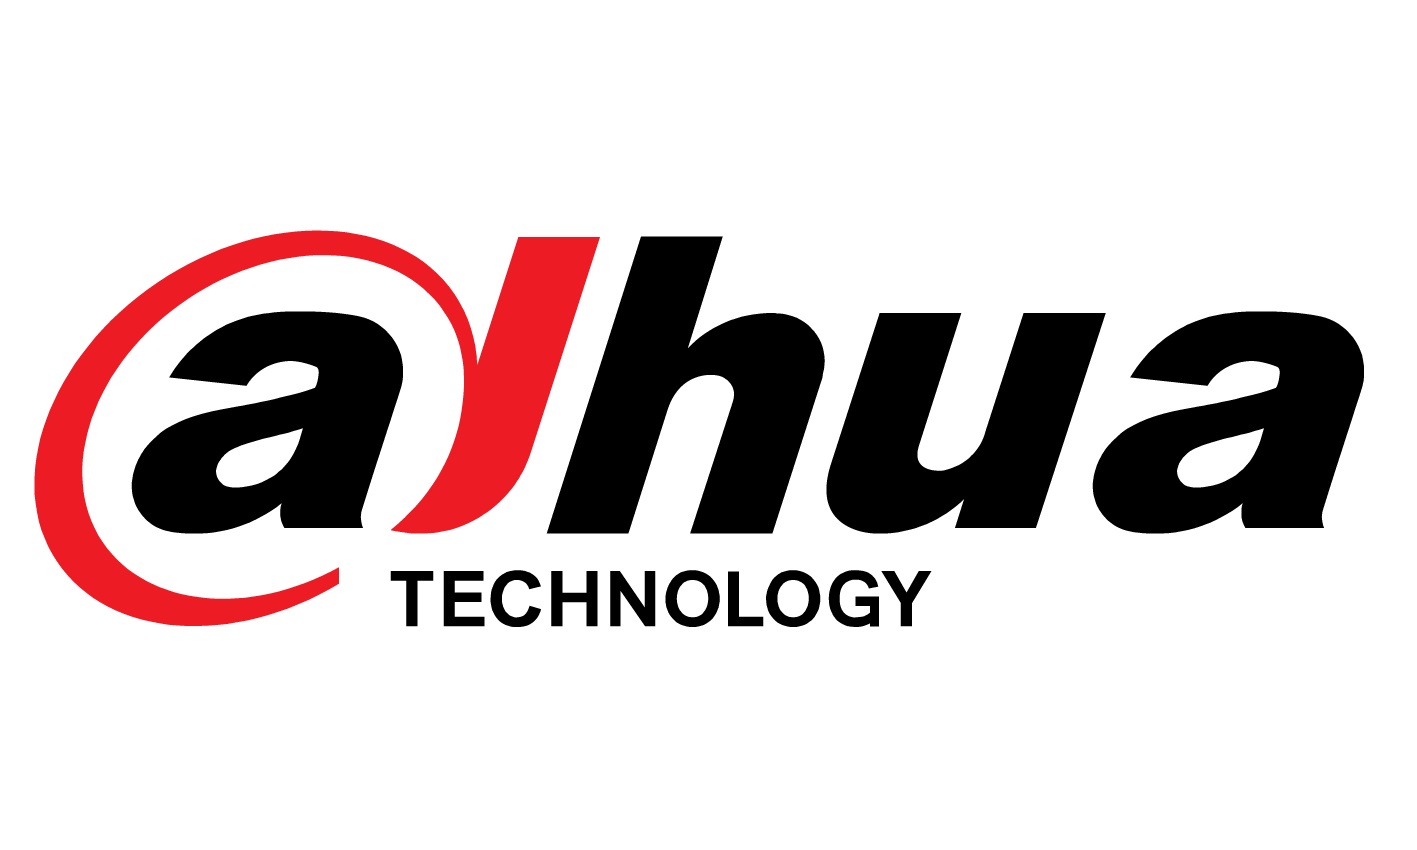 Dahua Technologies